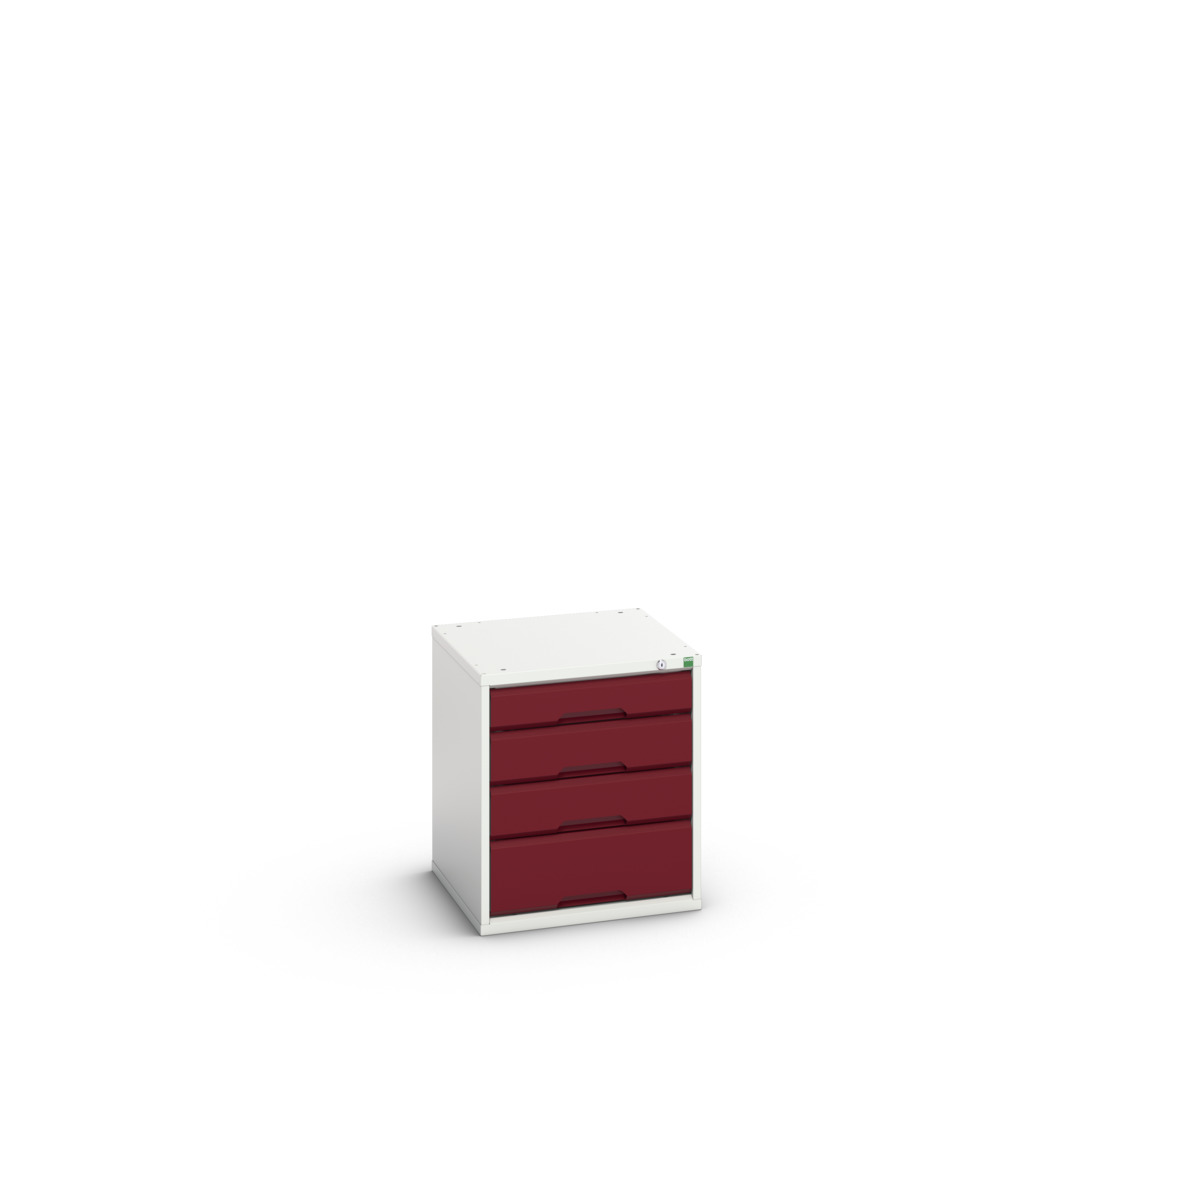 16925004.24 - verso drawer cabinet